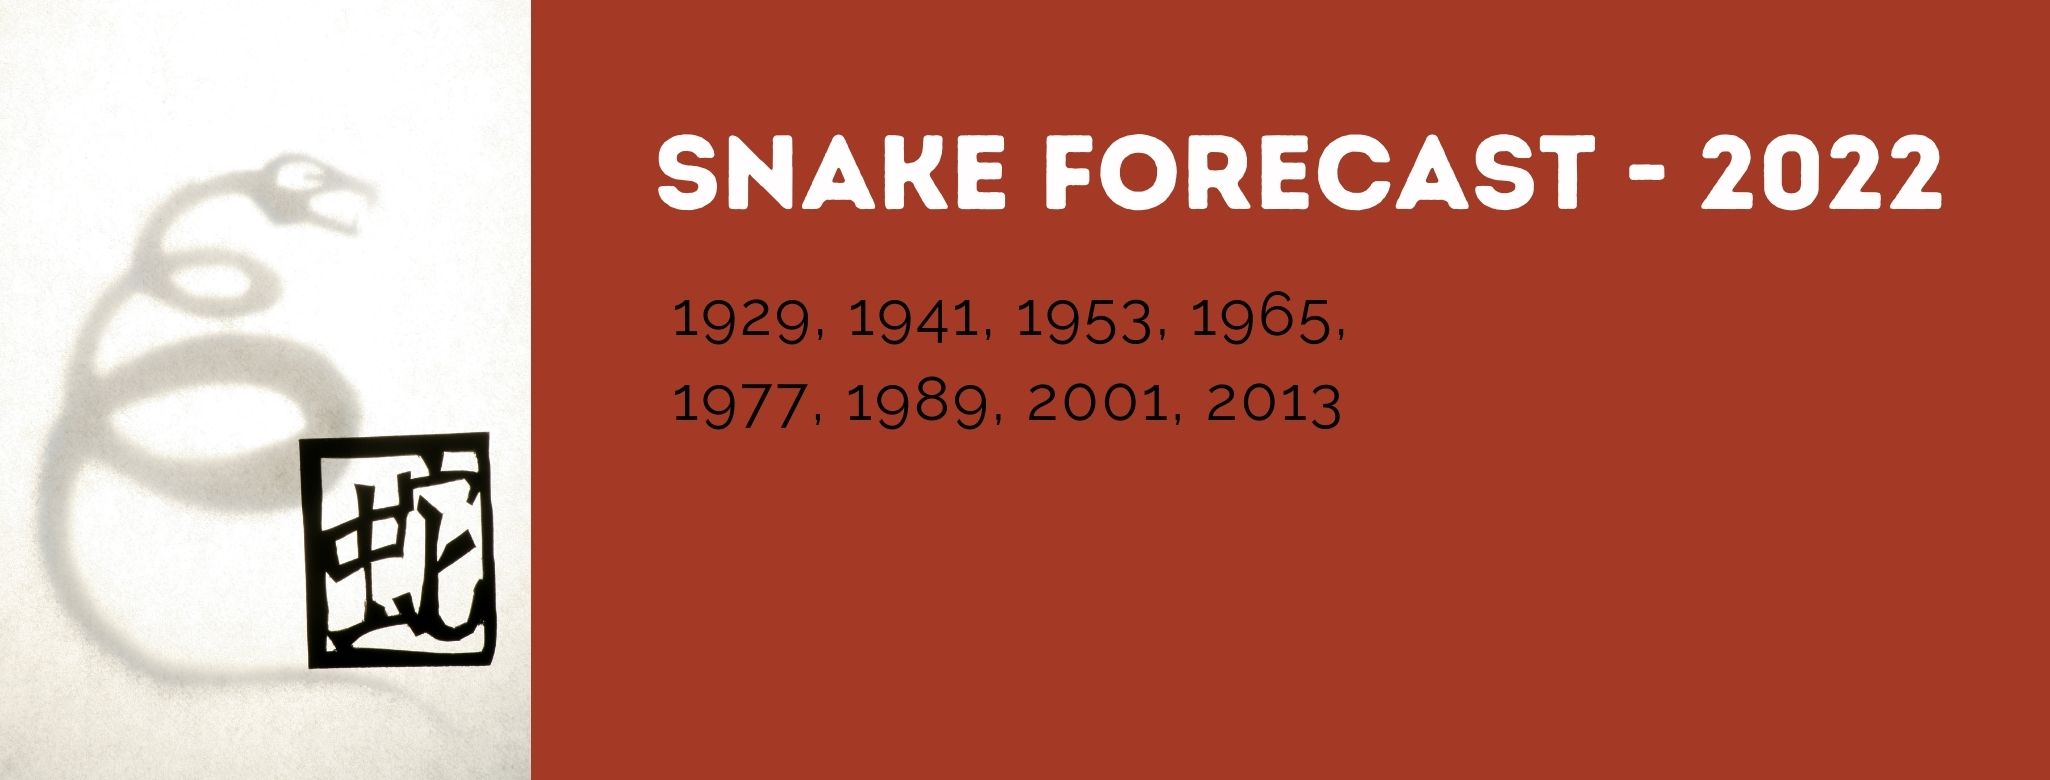 Snake Chinese Zodiac Forecast - 2022